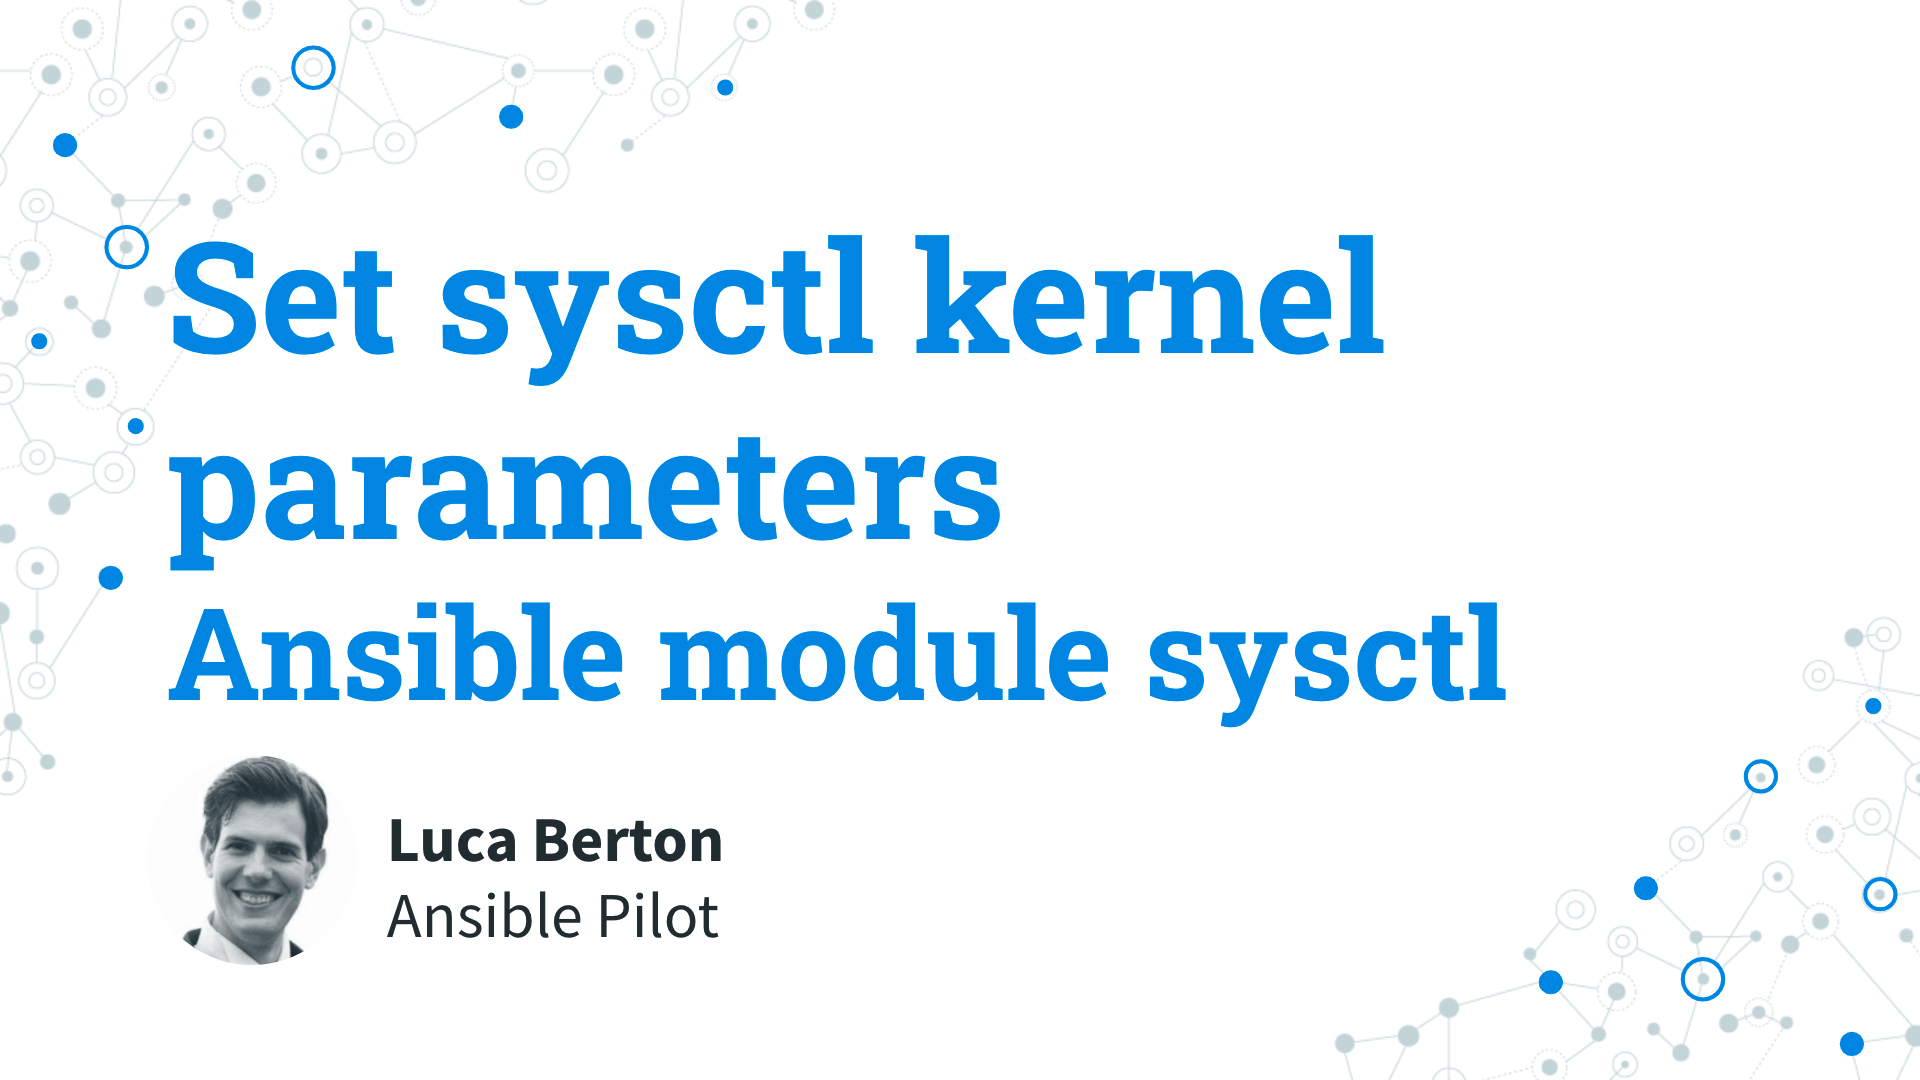 Set sysctl kernel parameters - Ansible module sysctl